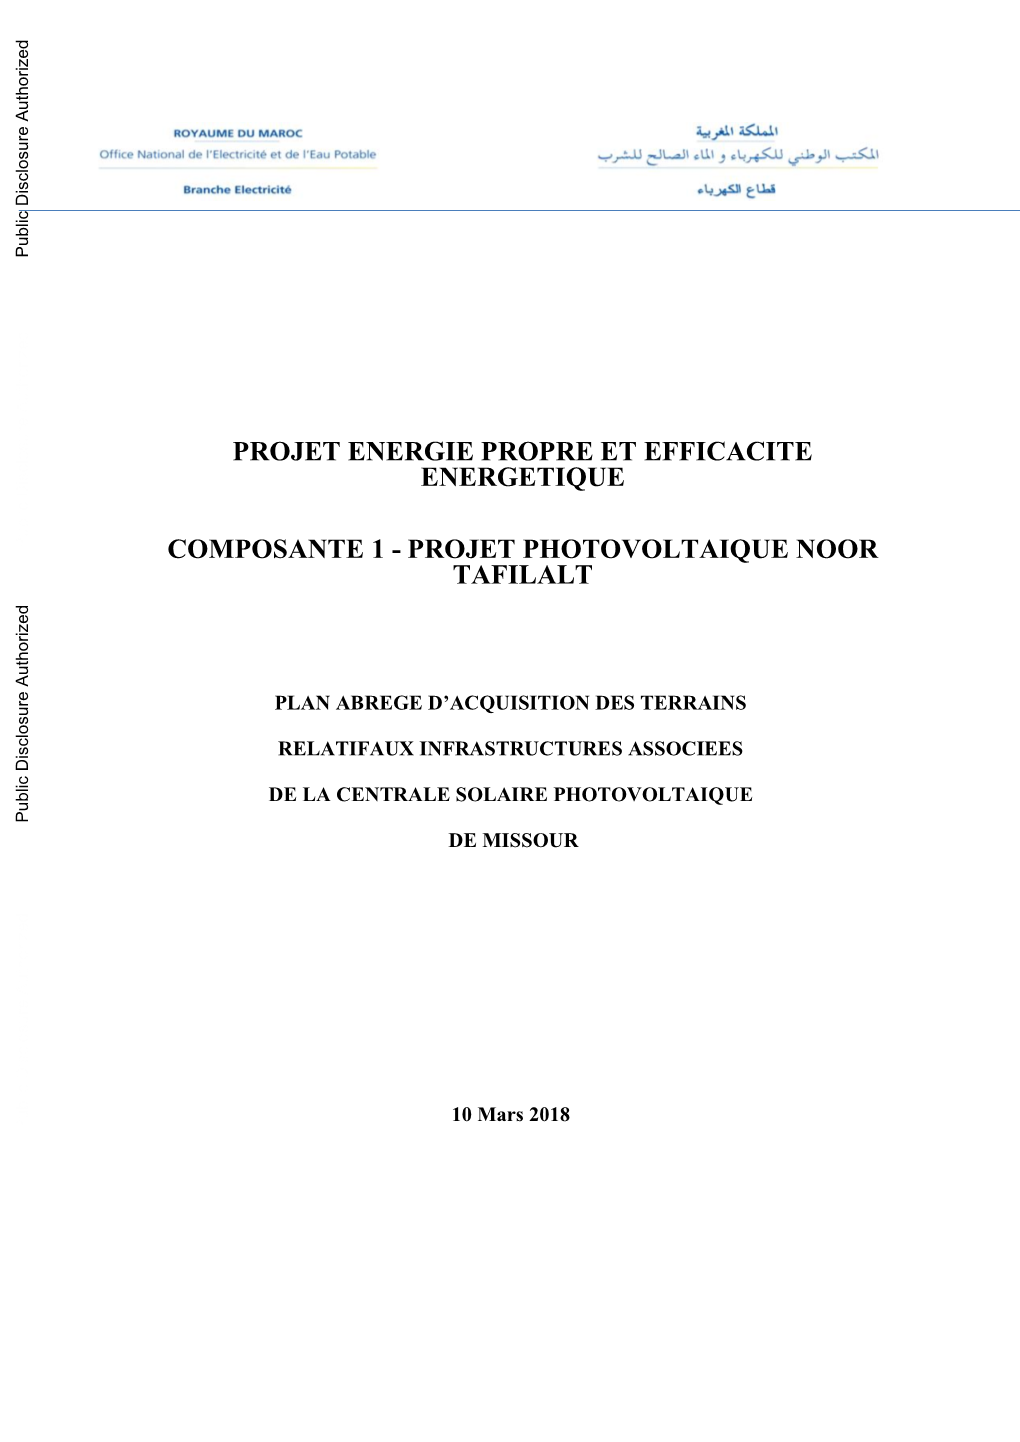 Projet Photovoltaique Noor Tafilalt